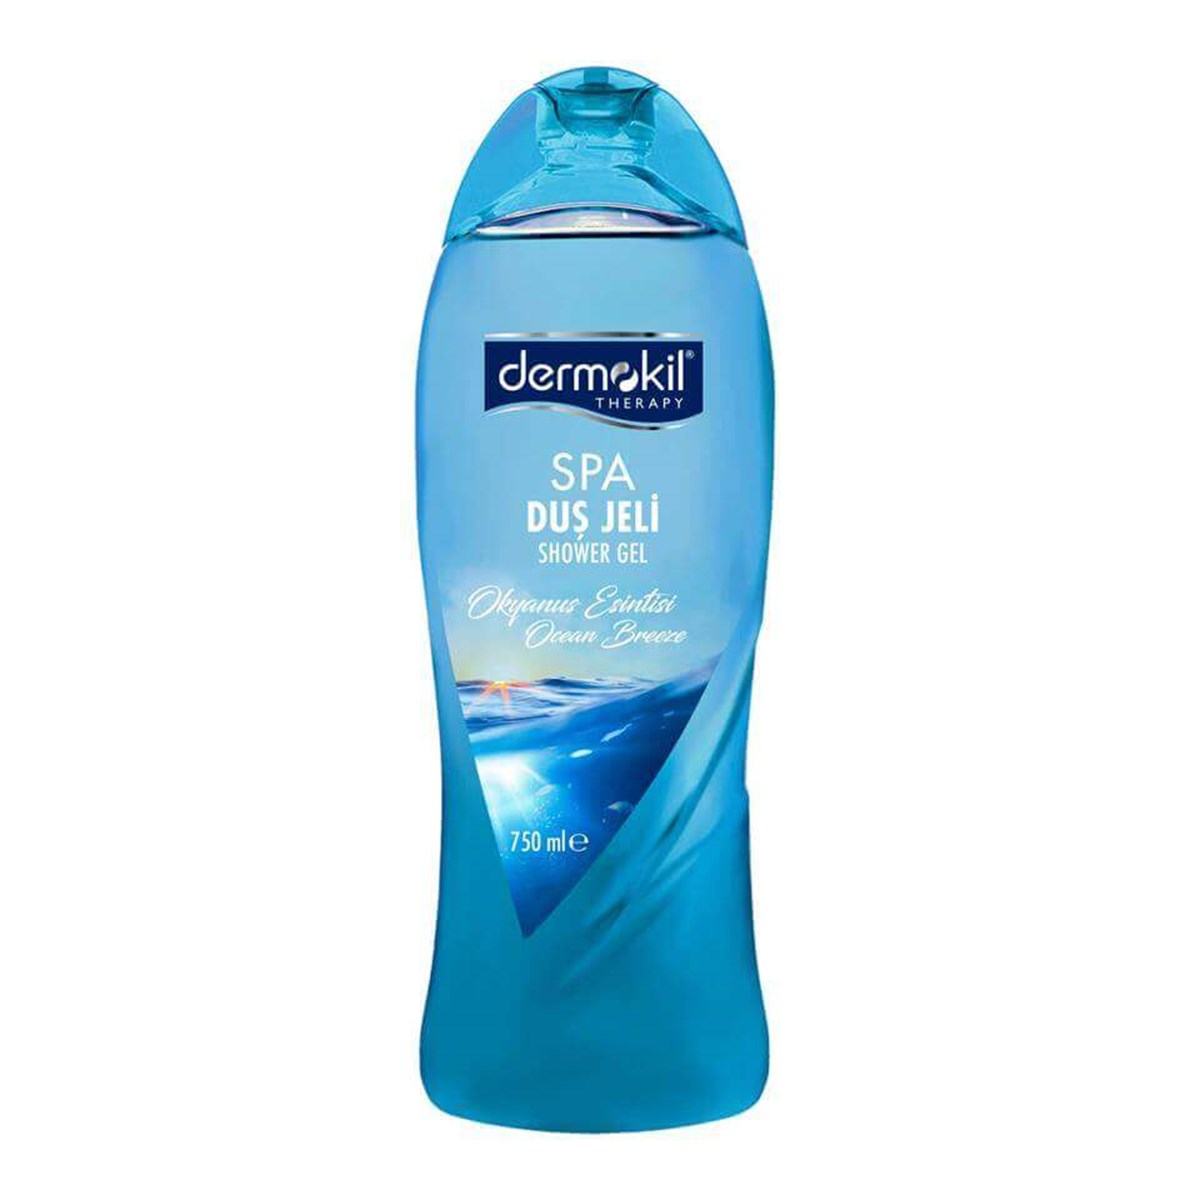 Dermokil Therapy Duş Jeli Spa 750 ml Fiyatları | Dermosiparis.com